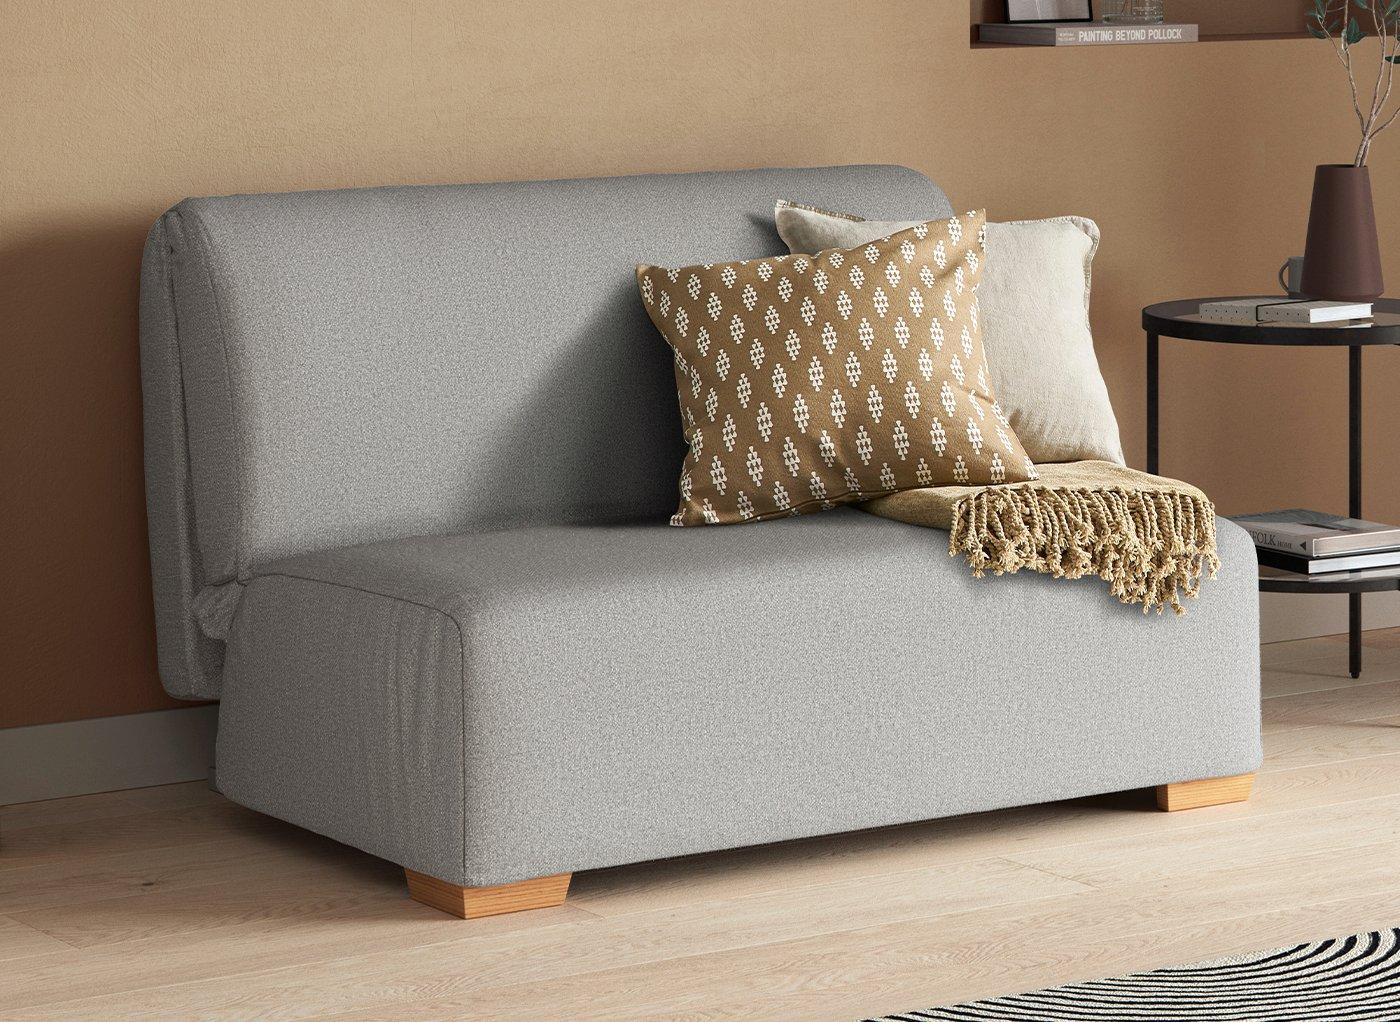 a frame sofa bed